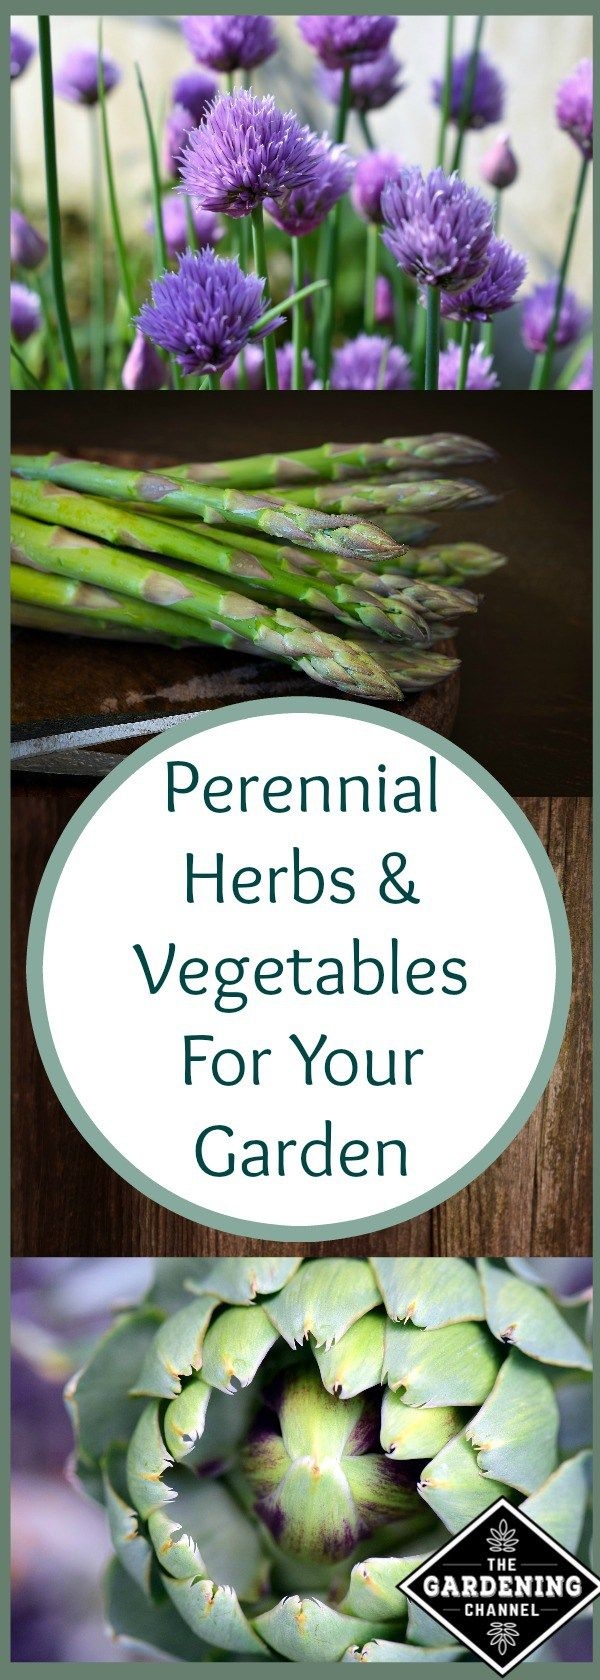 Plant perennial vegetables and herbs! (pinterest.com)